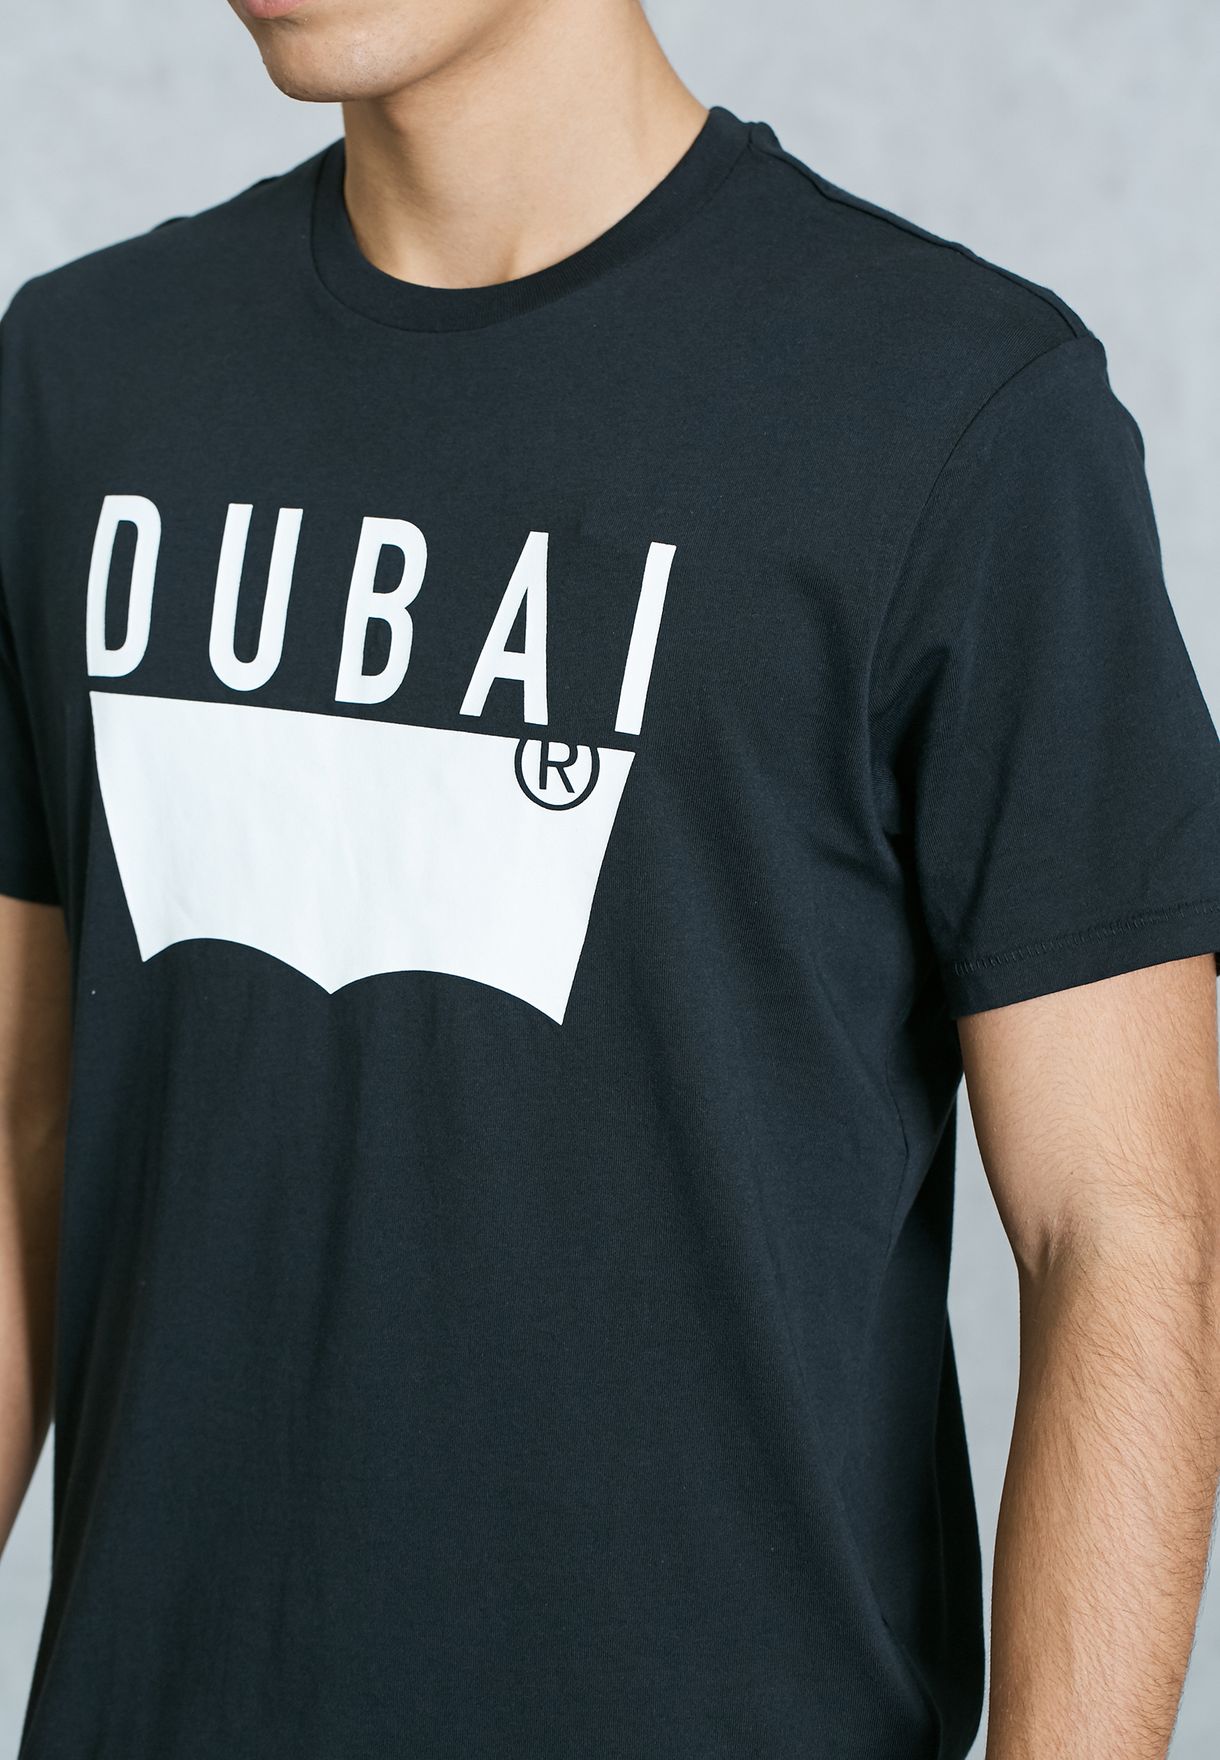 Buy Levis black Dubai T-Shirt for Men in Dubai, Abu Dhabi